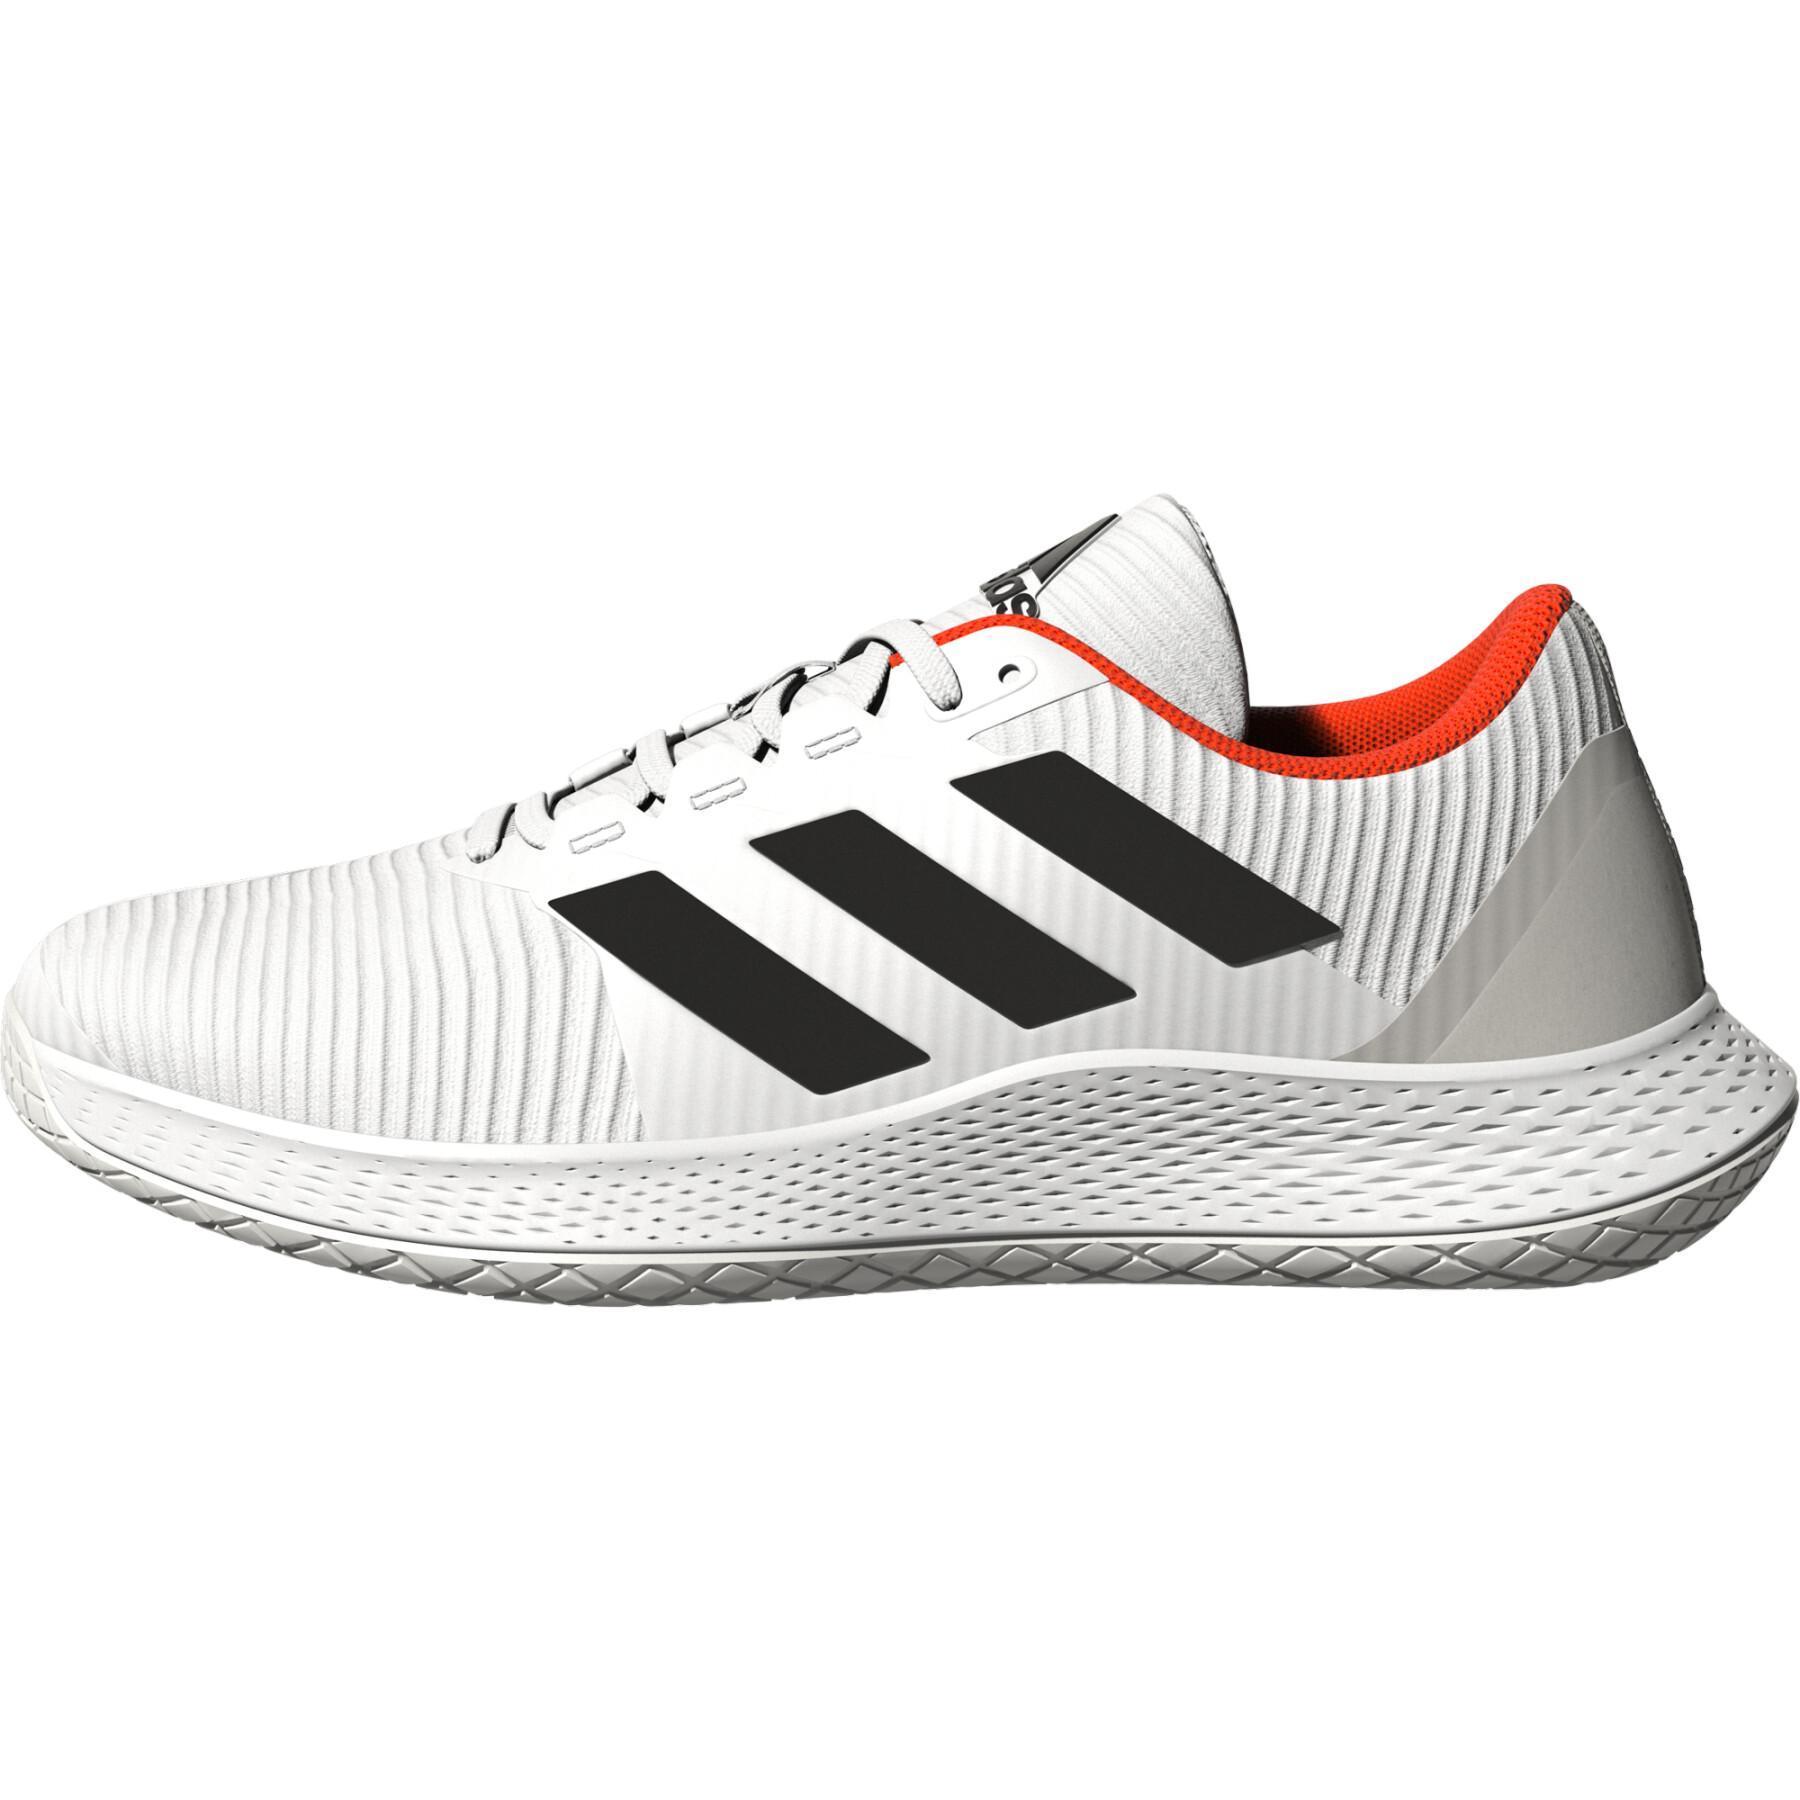 Handball shoes adidas ForceBounce